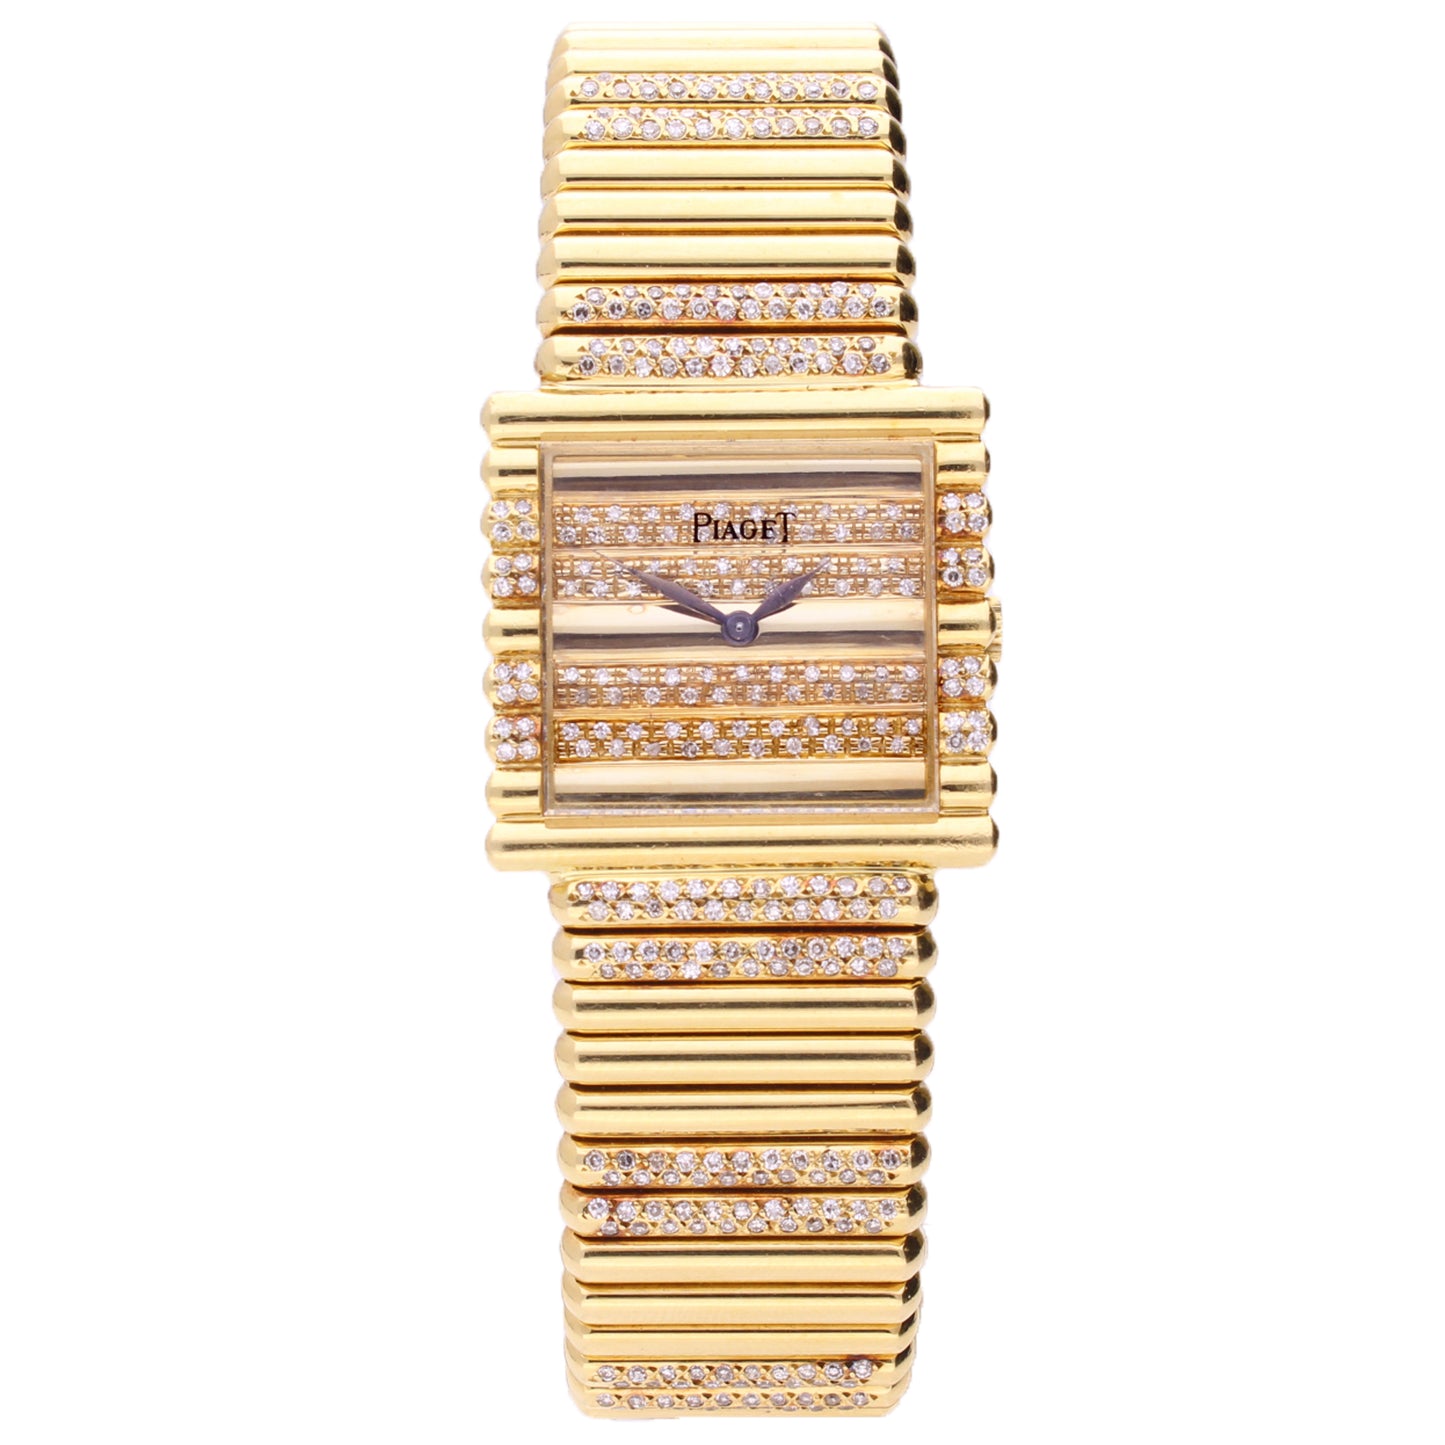 18ct yellow gold Piaget, diamond set bracelet watch. Made 1970